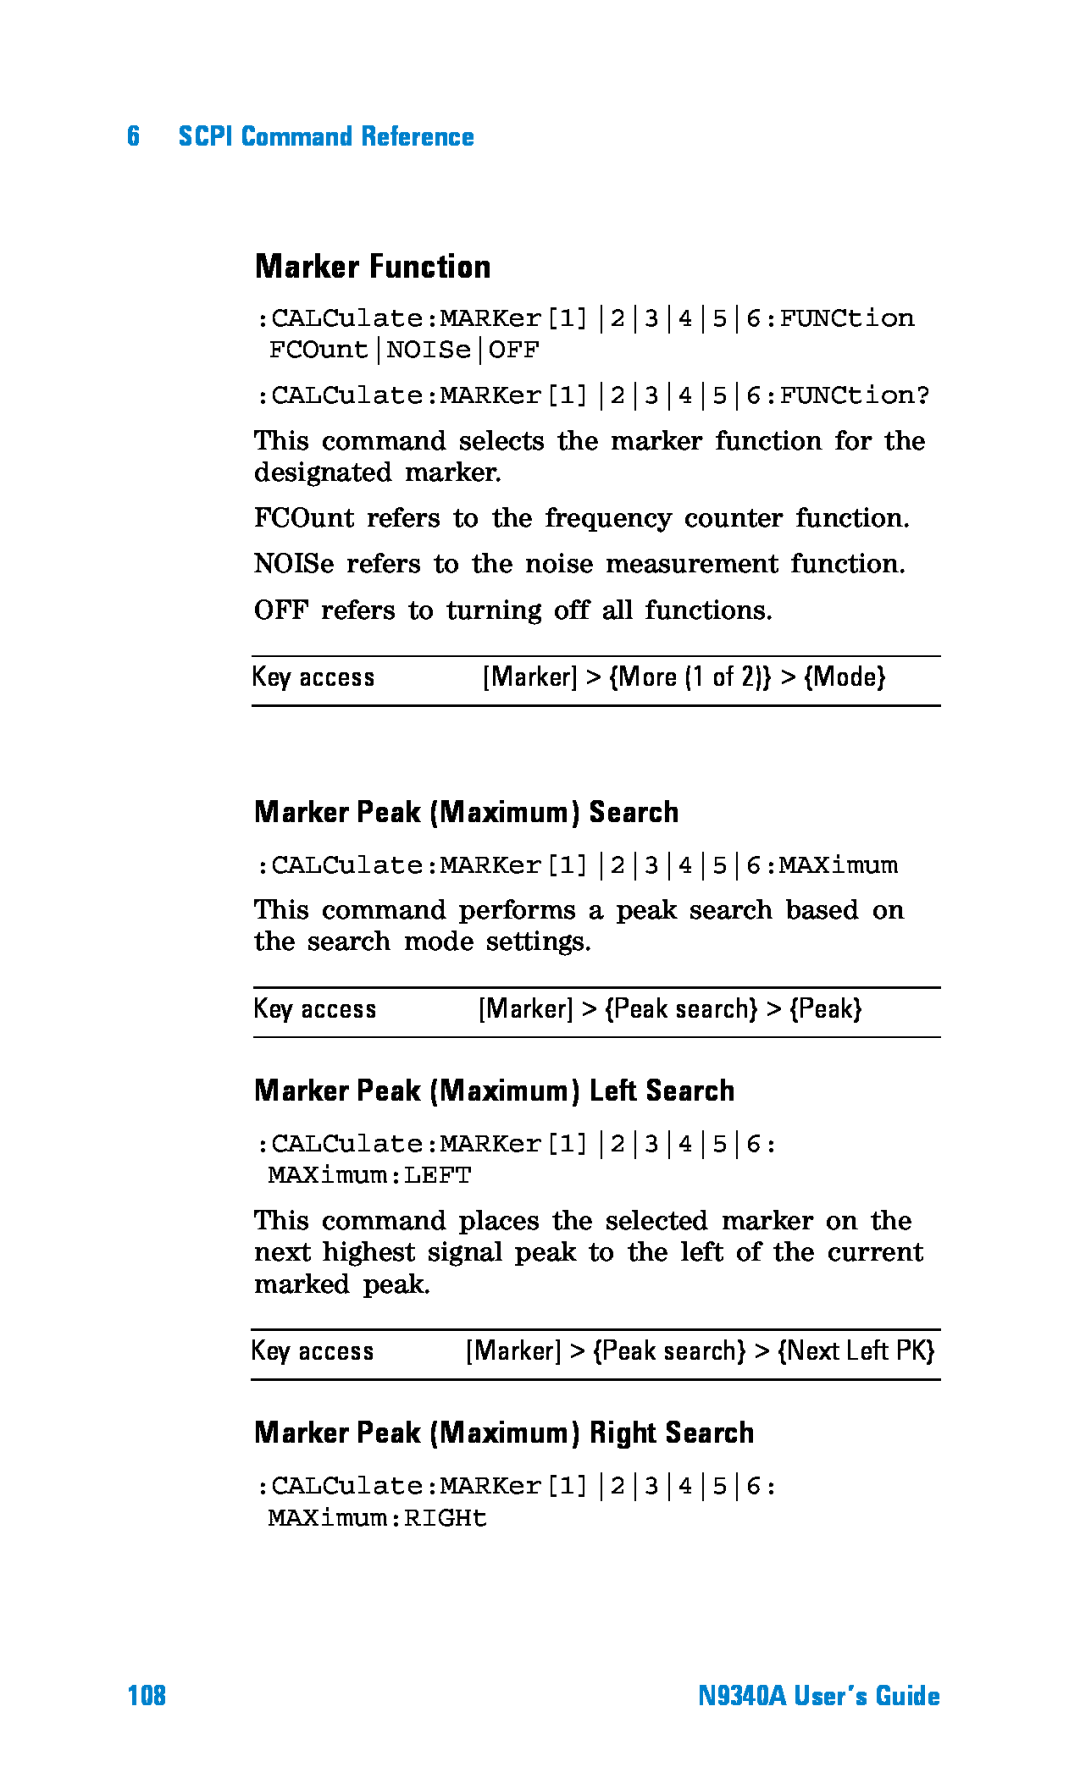 Agilent Technologies N9340A manual Marker Function, Marker Peak Maximum Search, Marker Peak Maximum Left Search 